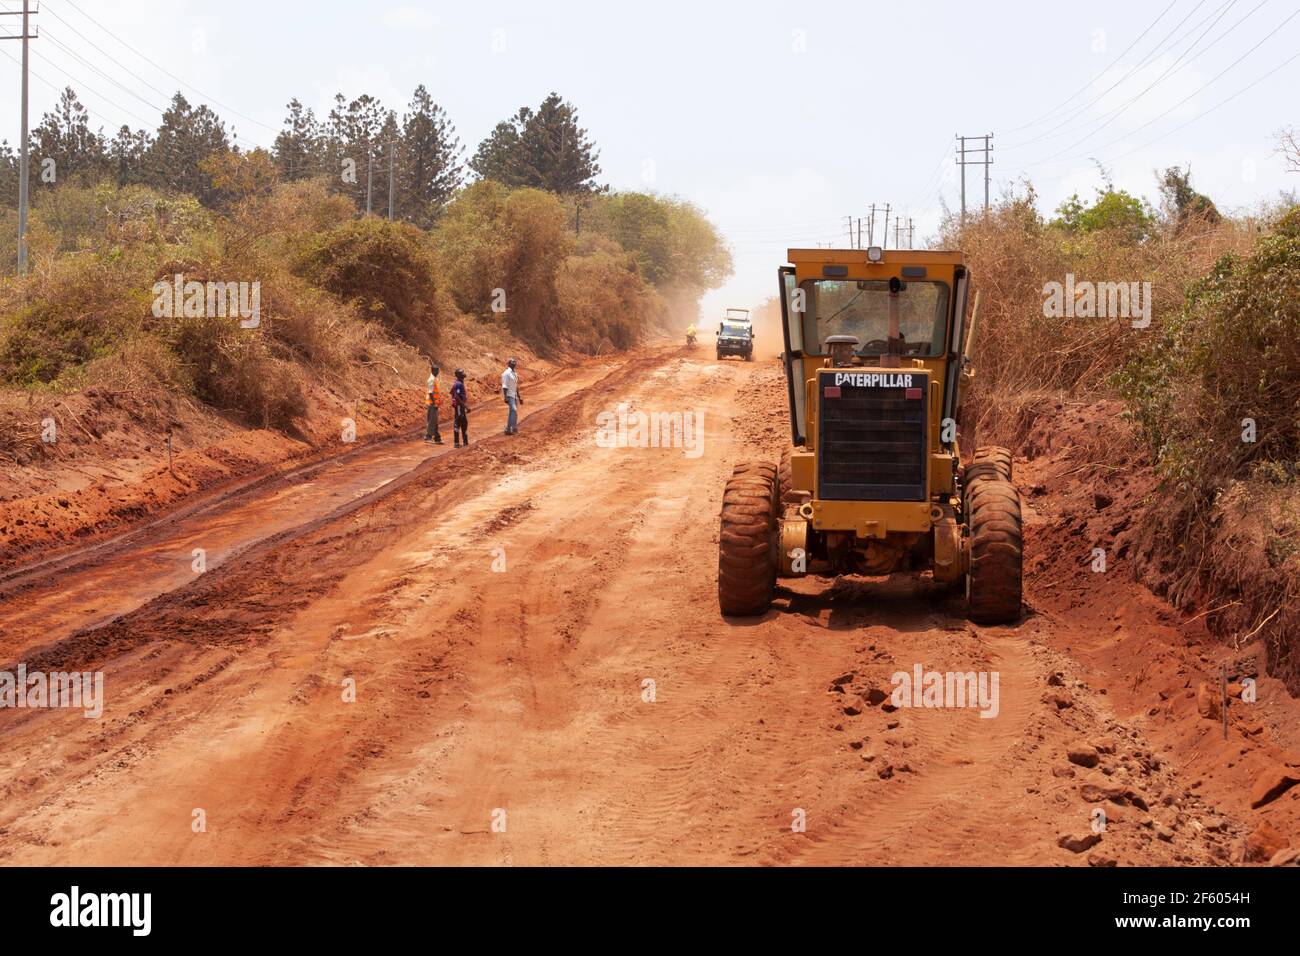 NEAR MALINDI, KENYA, AFRICA - Road construction in Africa Stock Photo